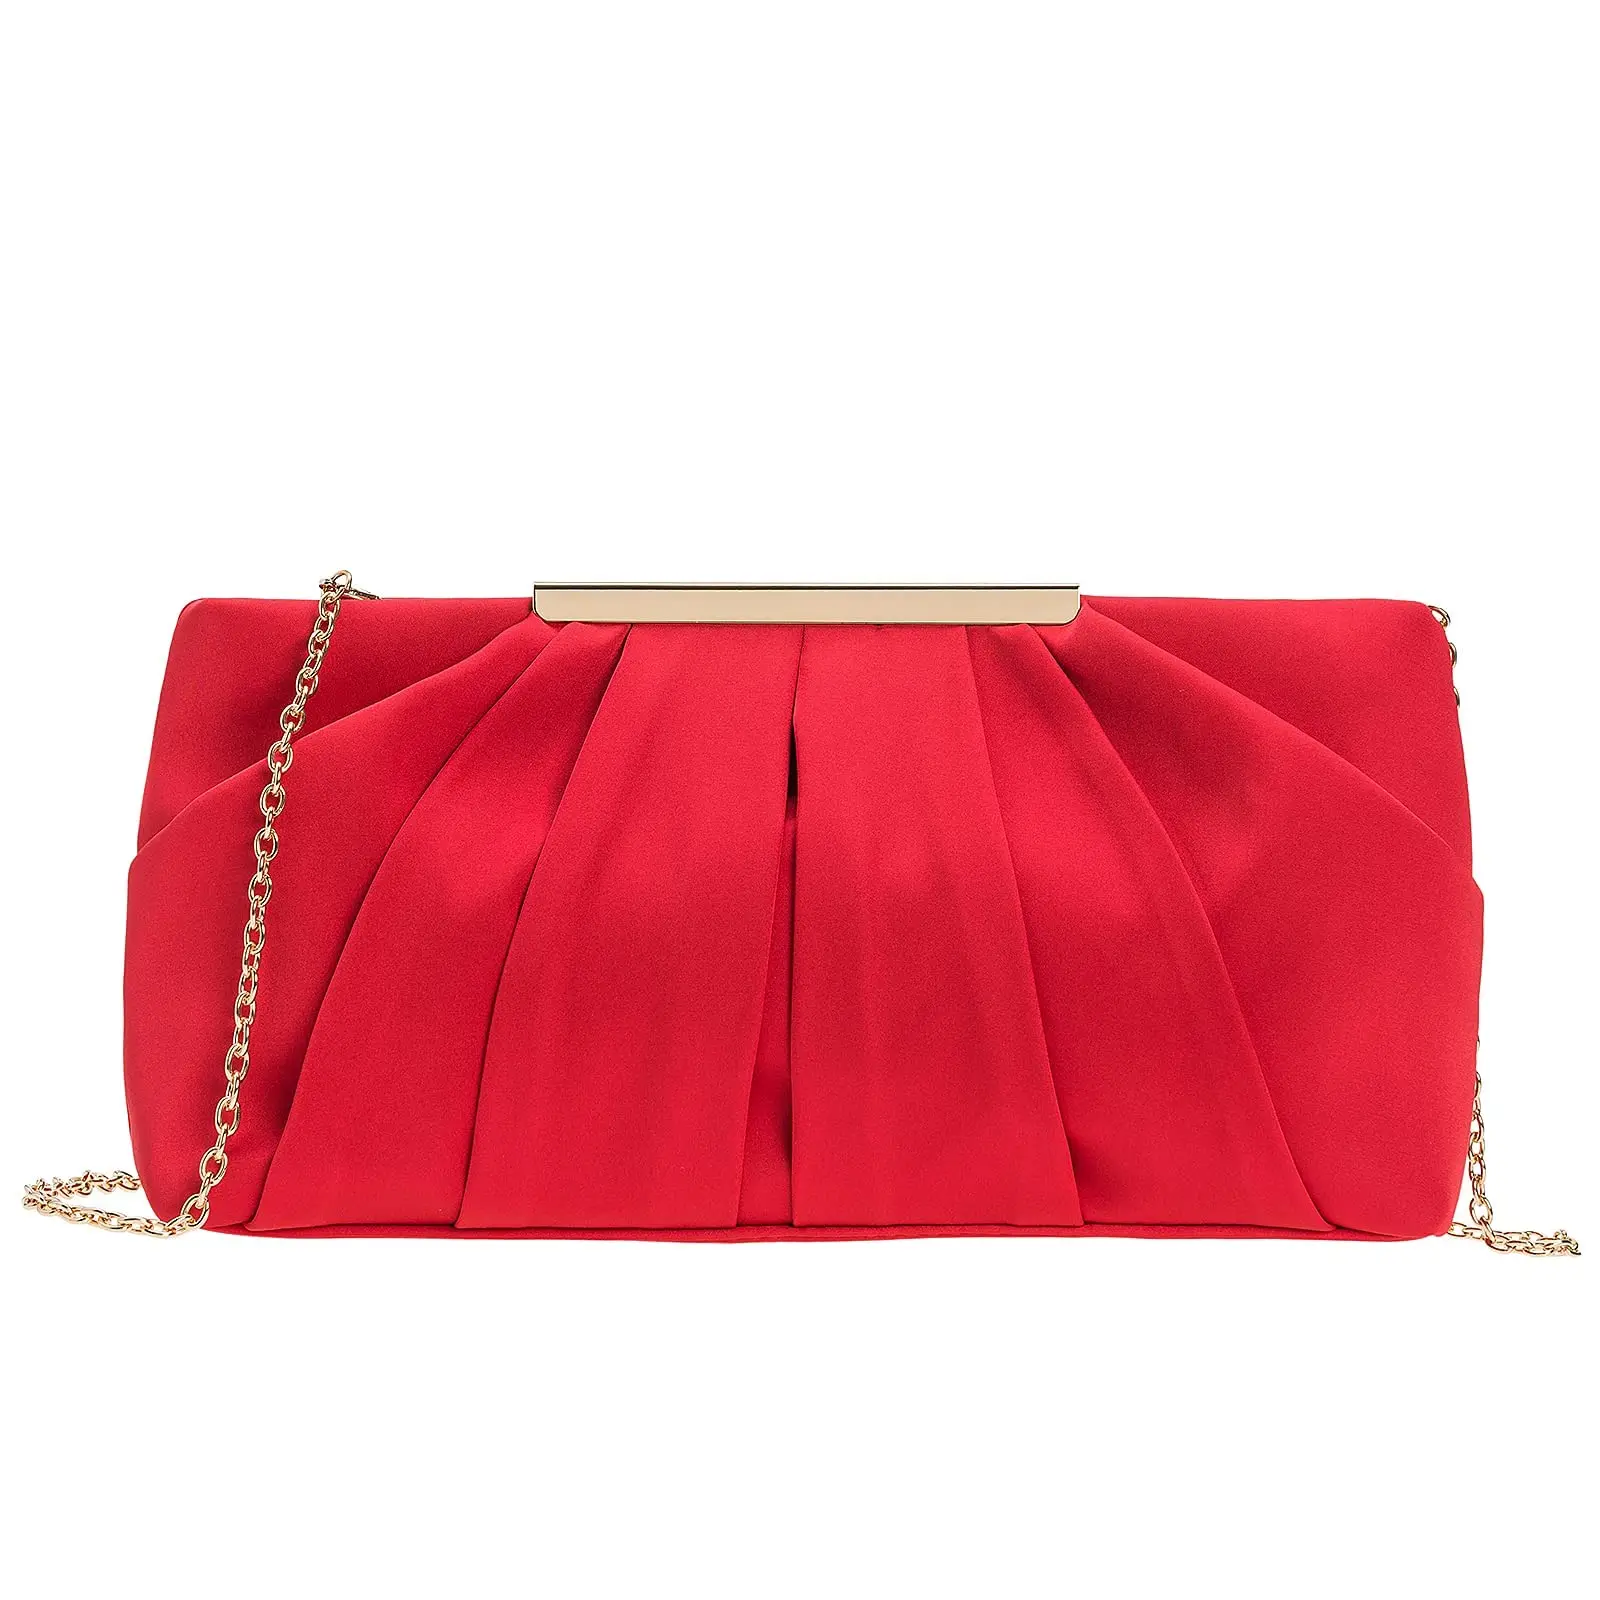 CHARMING TAILOR Clutch Evening Bag Elegant Pleated Satin Formal Handbag  Simple Classy Purse for Women